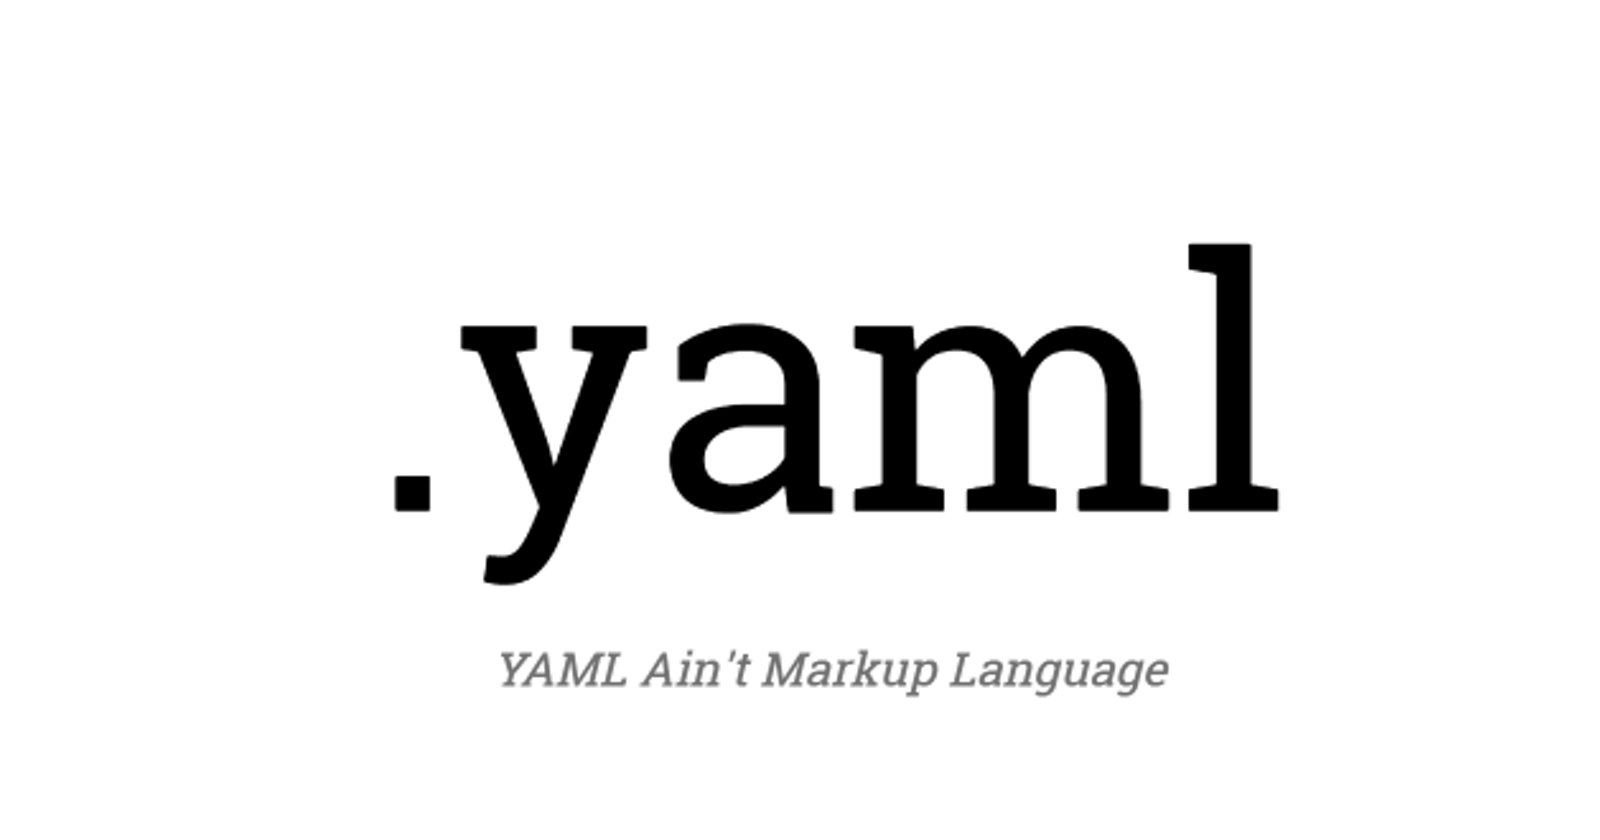 YAML  Simple Guide